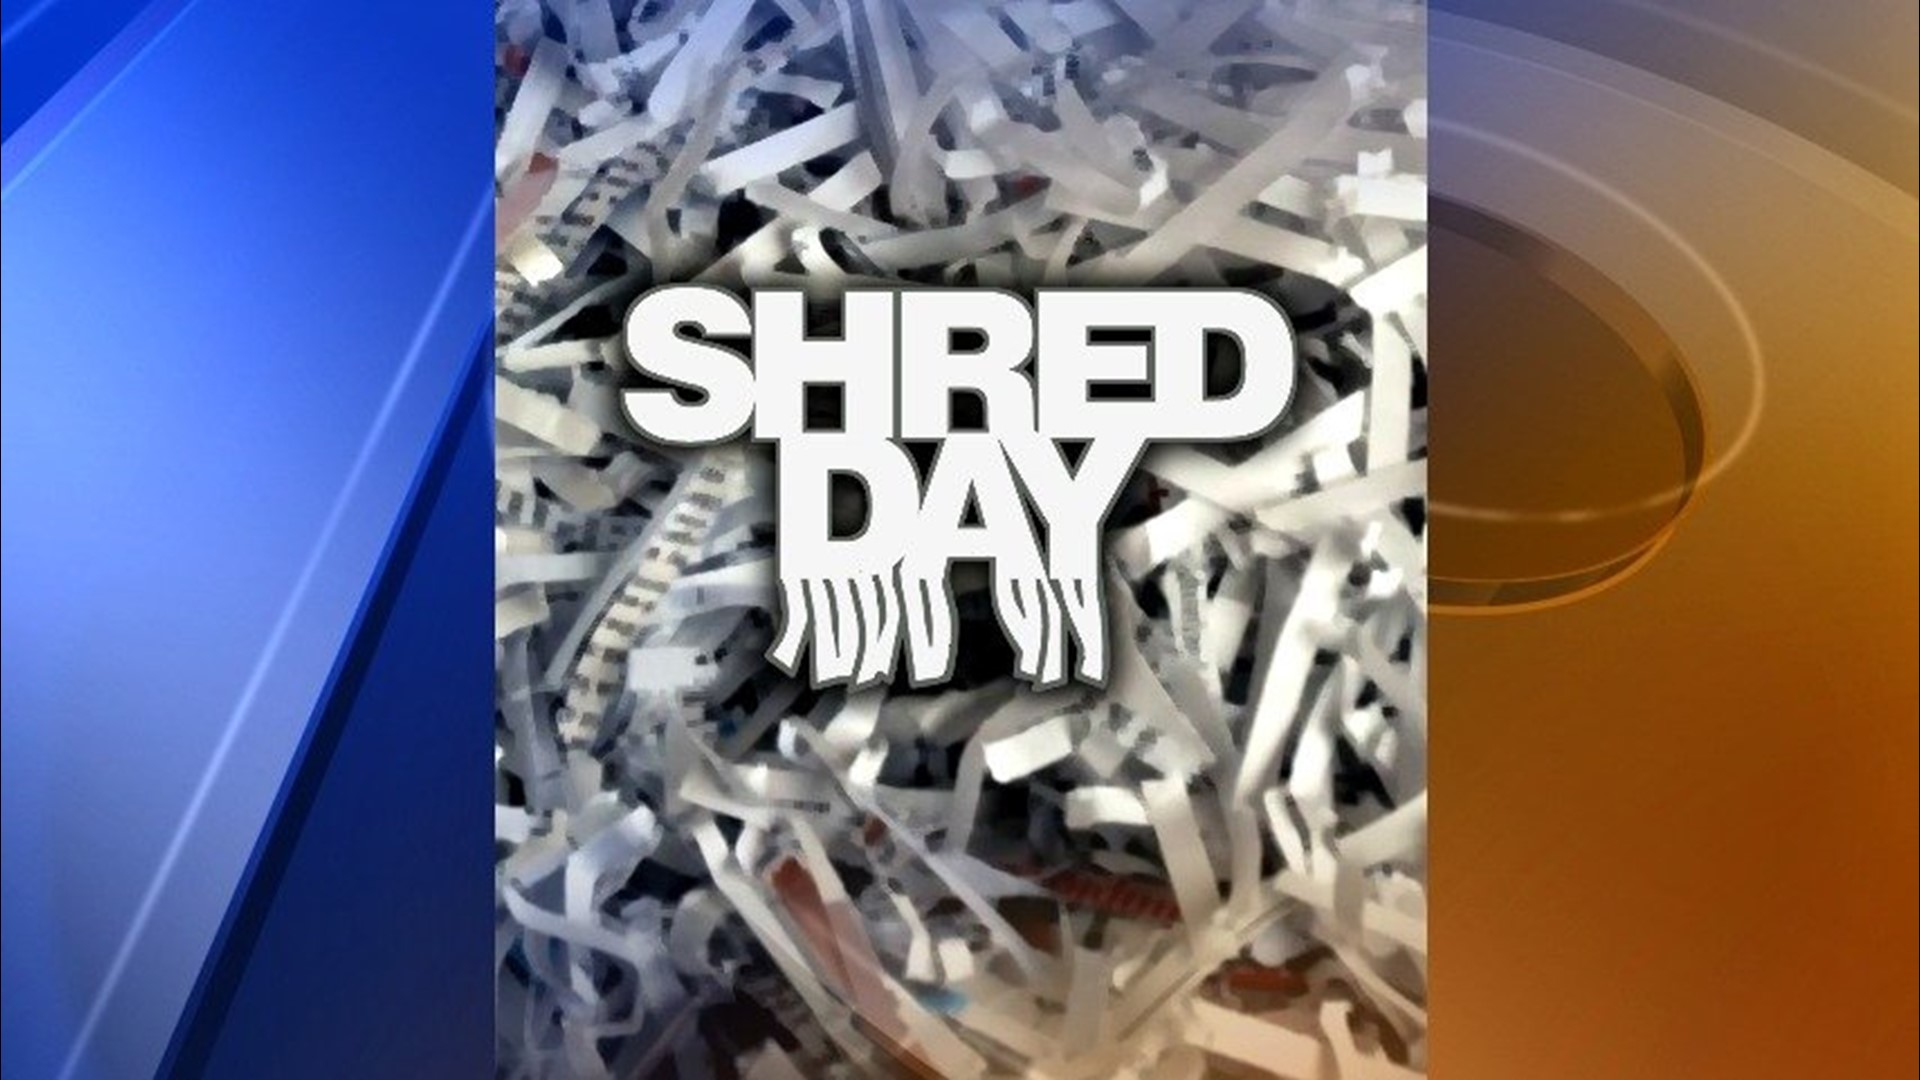 Recycling Old Documents Community Shredding Day